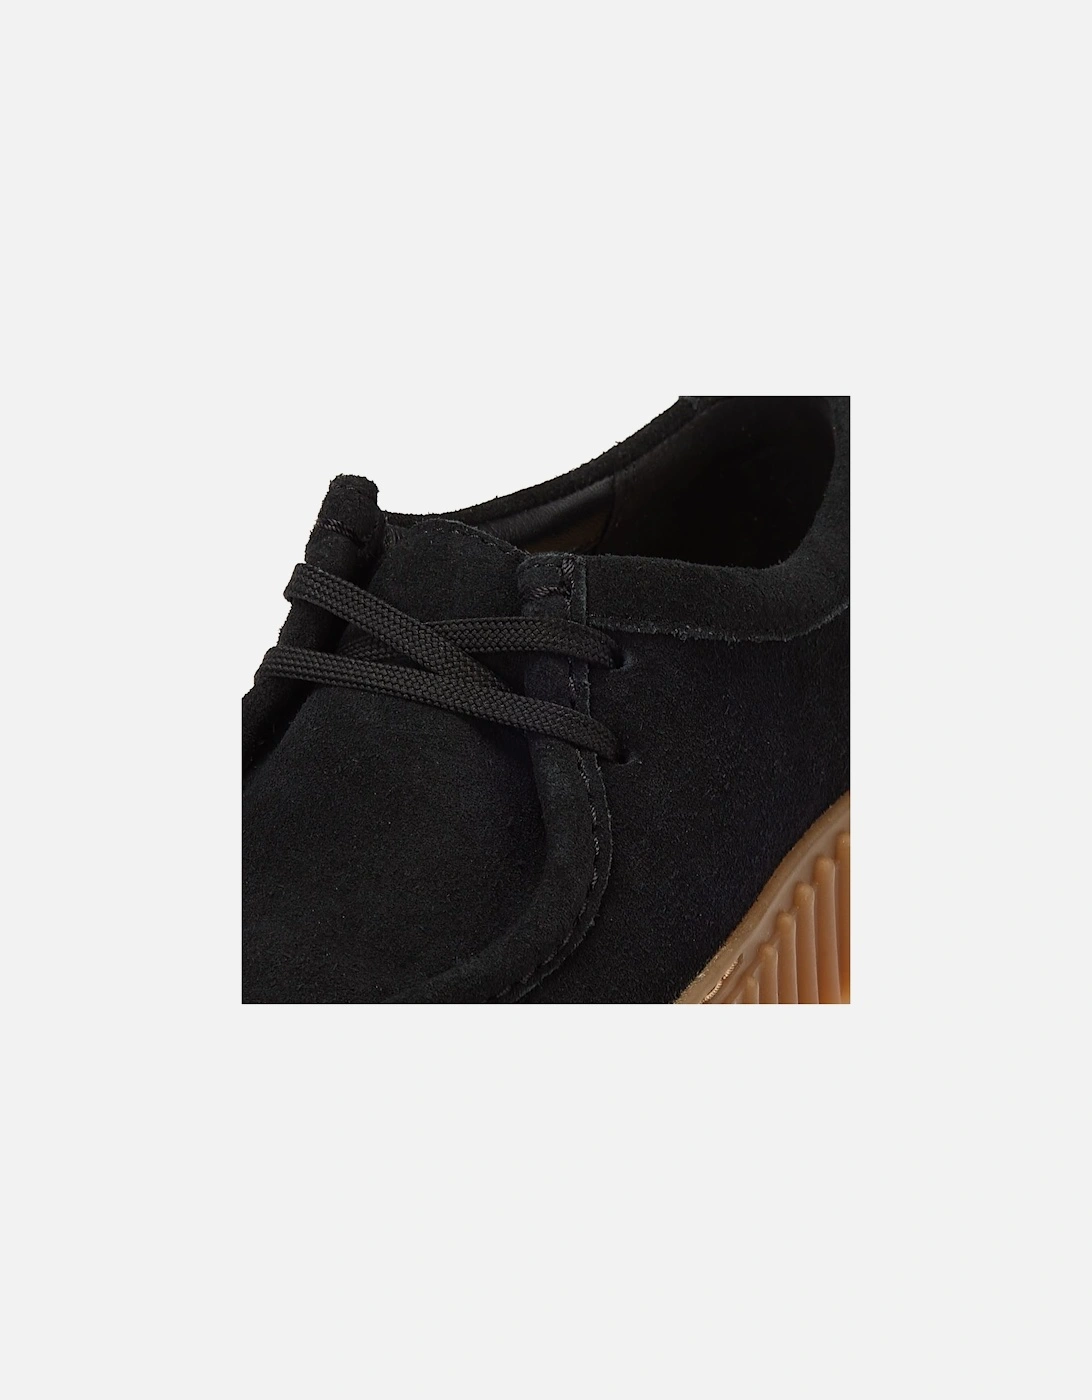 Torhill Bee Women's Black Shoes